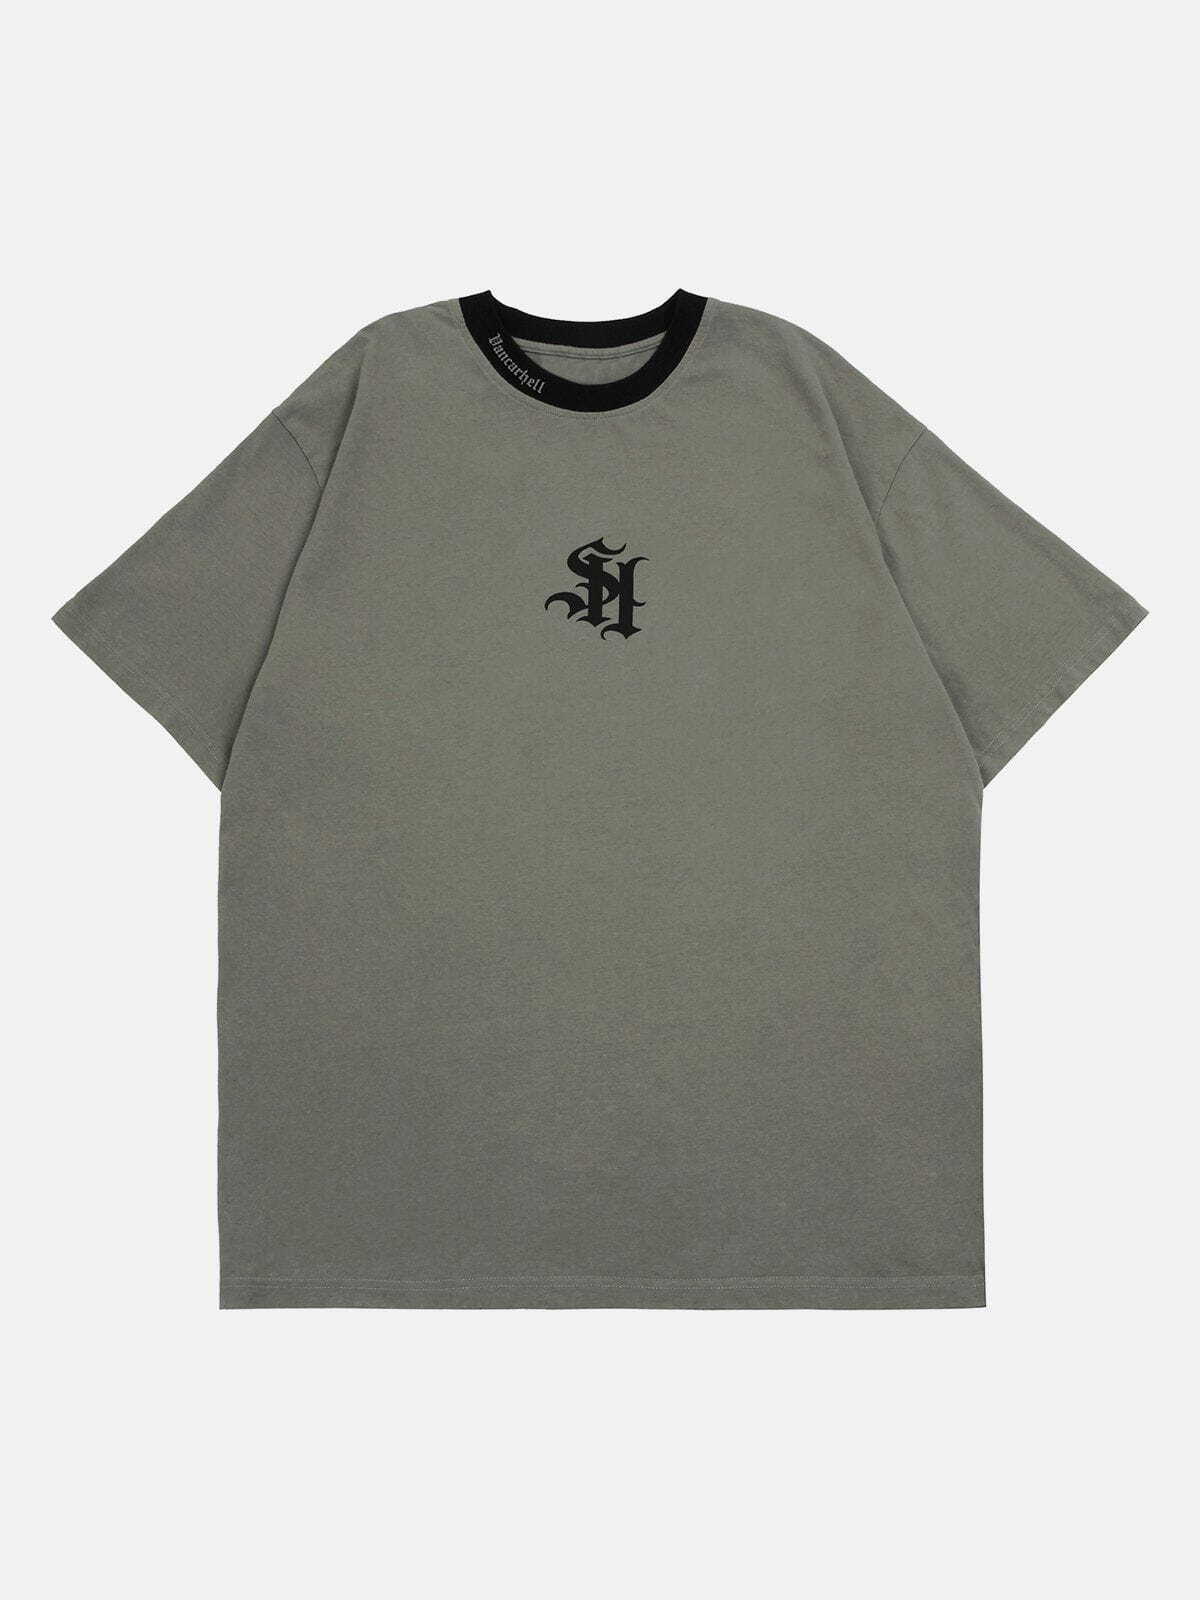 youthful retro print tee edgy  vibrant streetwear shirt 6153